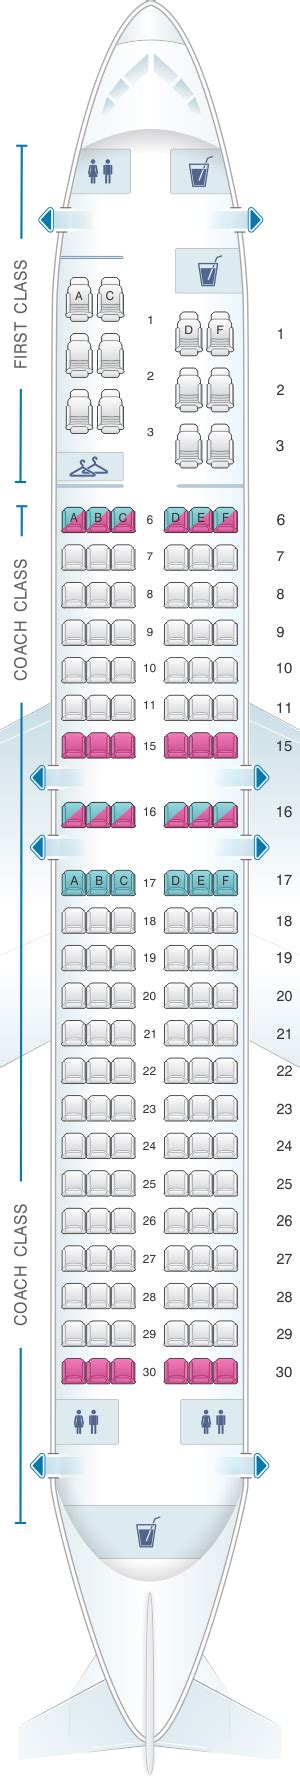 Boeing Alaska Airlines Seating Chart Brokeasshome Com